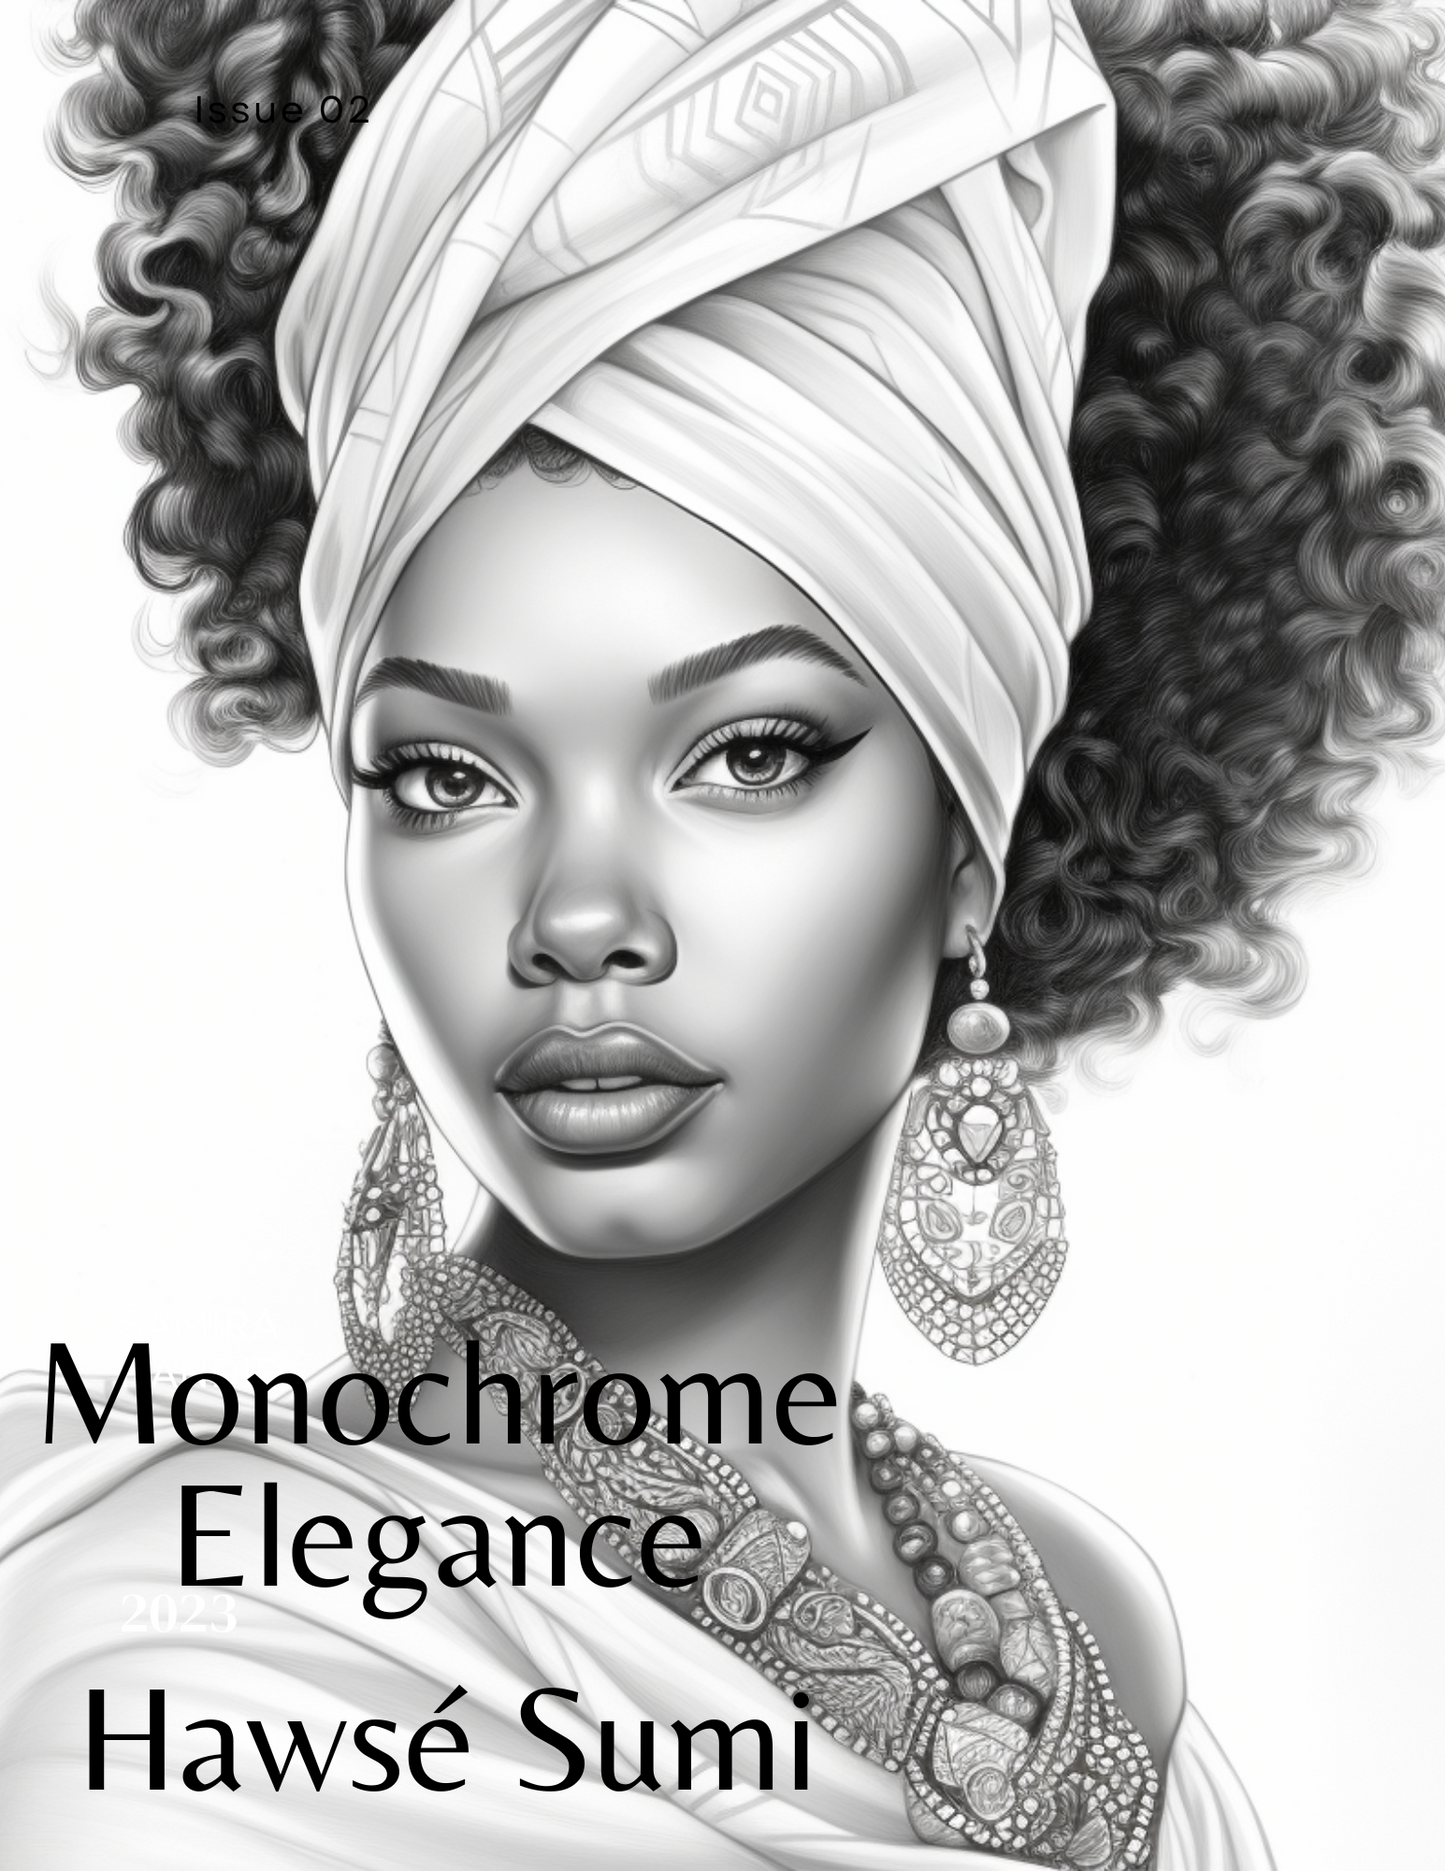 Monochrome Elegance: Inspirational Coloring Book Series